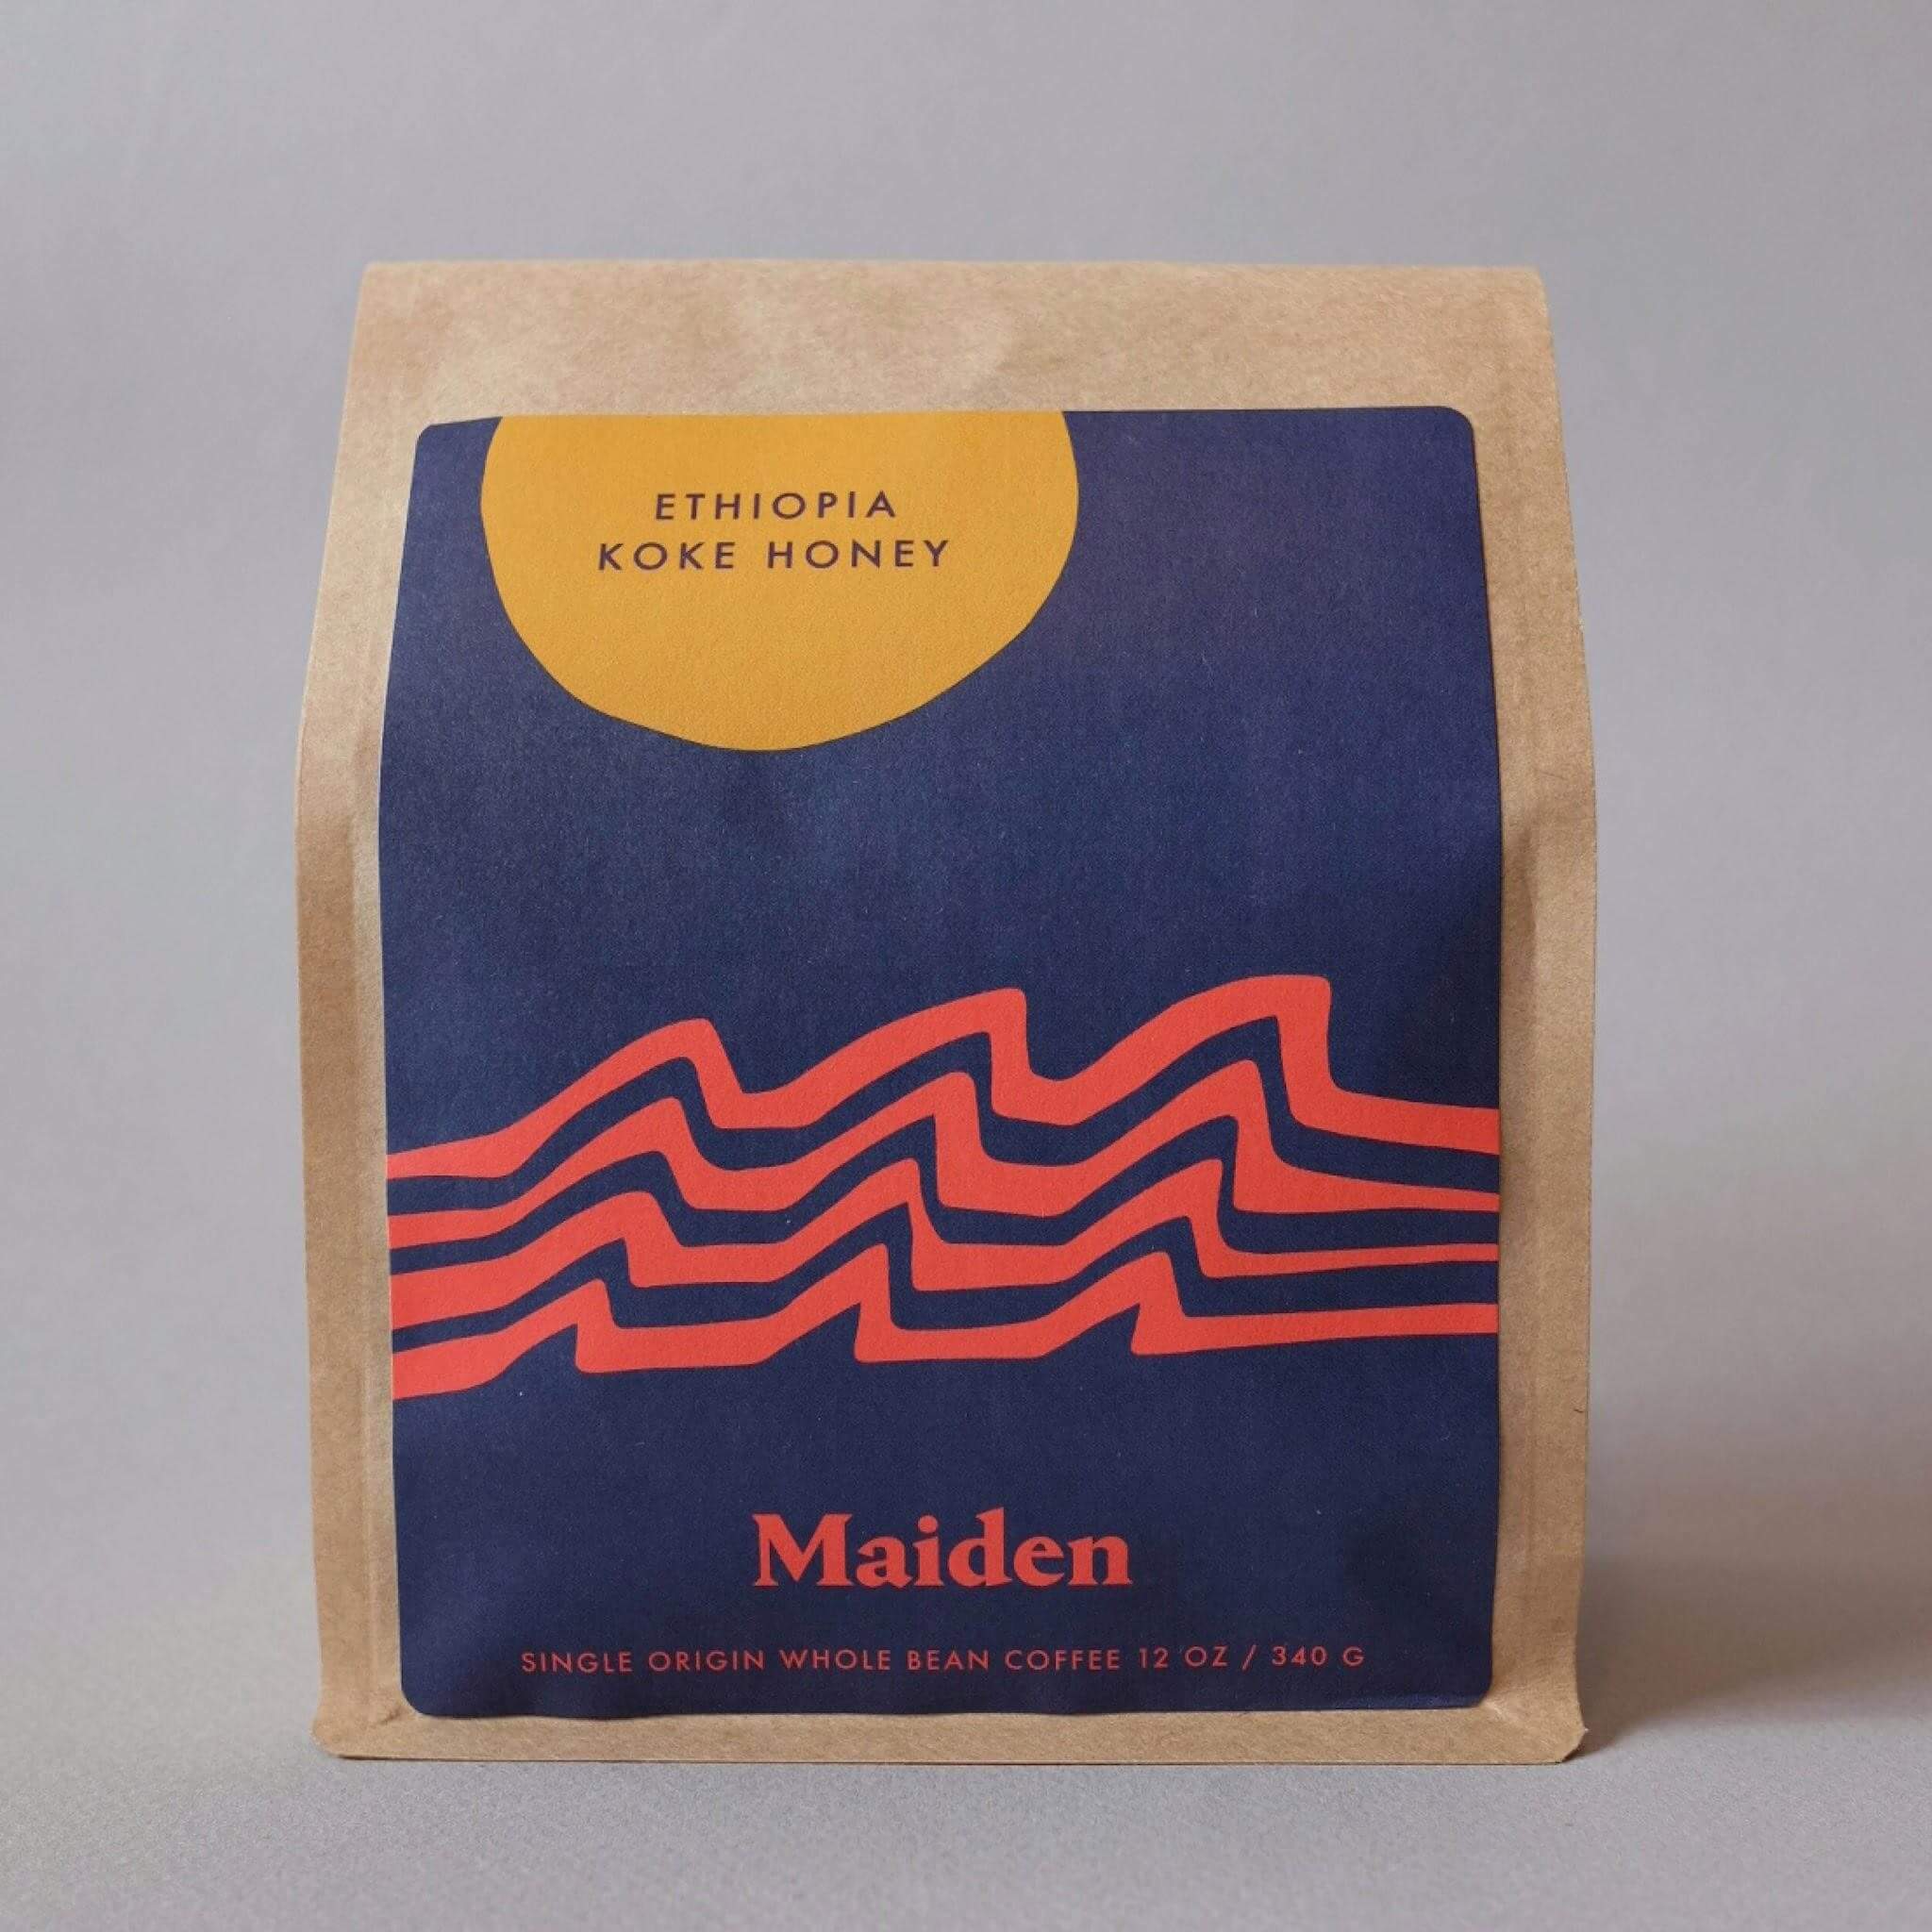 Maiden Coffee Roasters Coffee bags